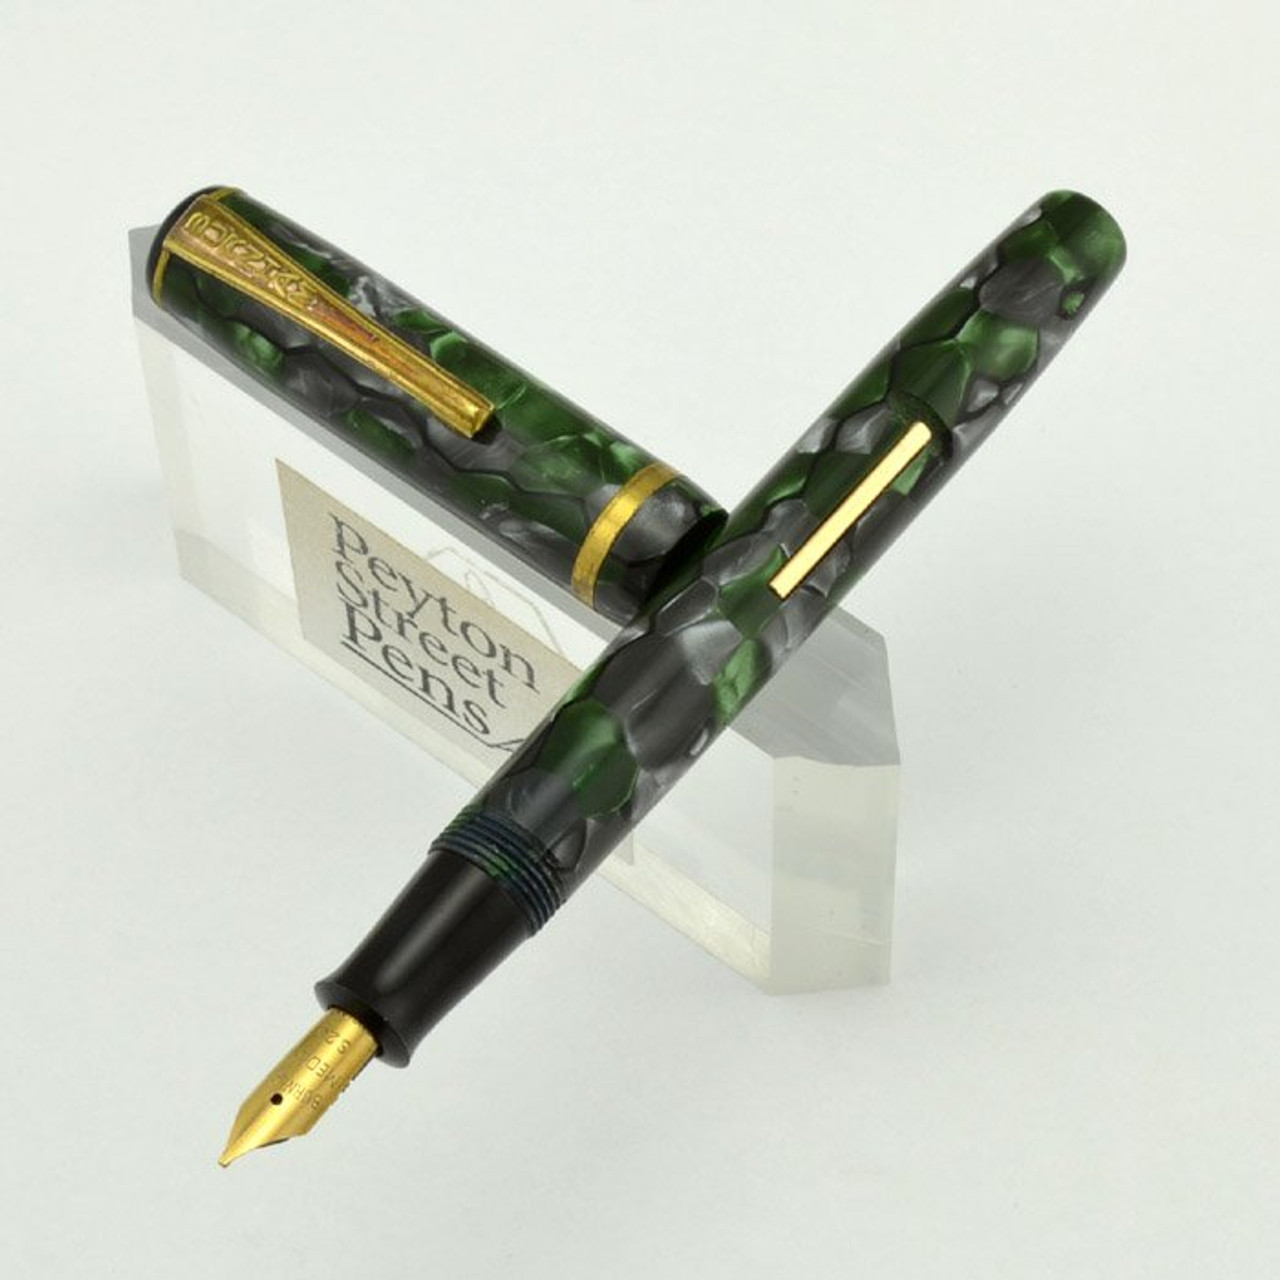 Burnham Model 47 Fountain Pen - UK, 1940s, Green-Grey-Black, Medium Plated Nib (Very Nice, Restored)